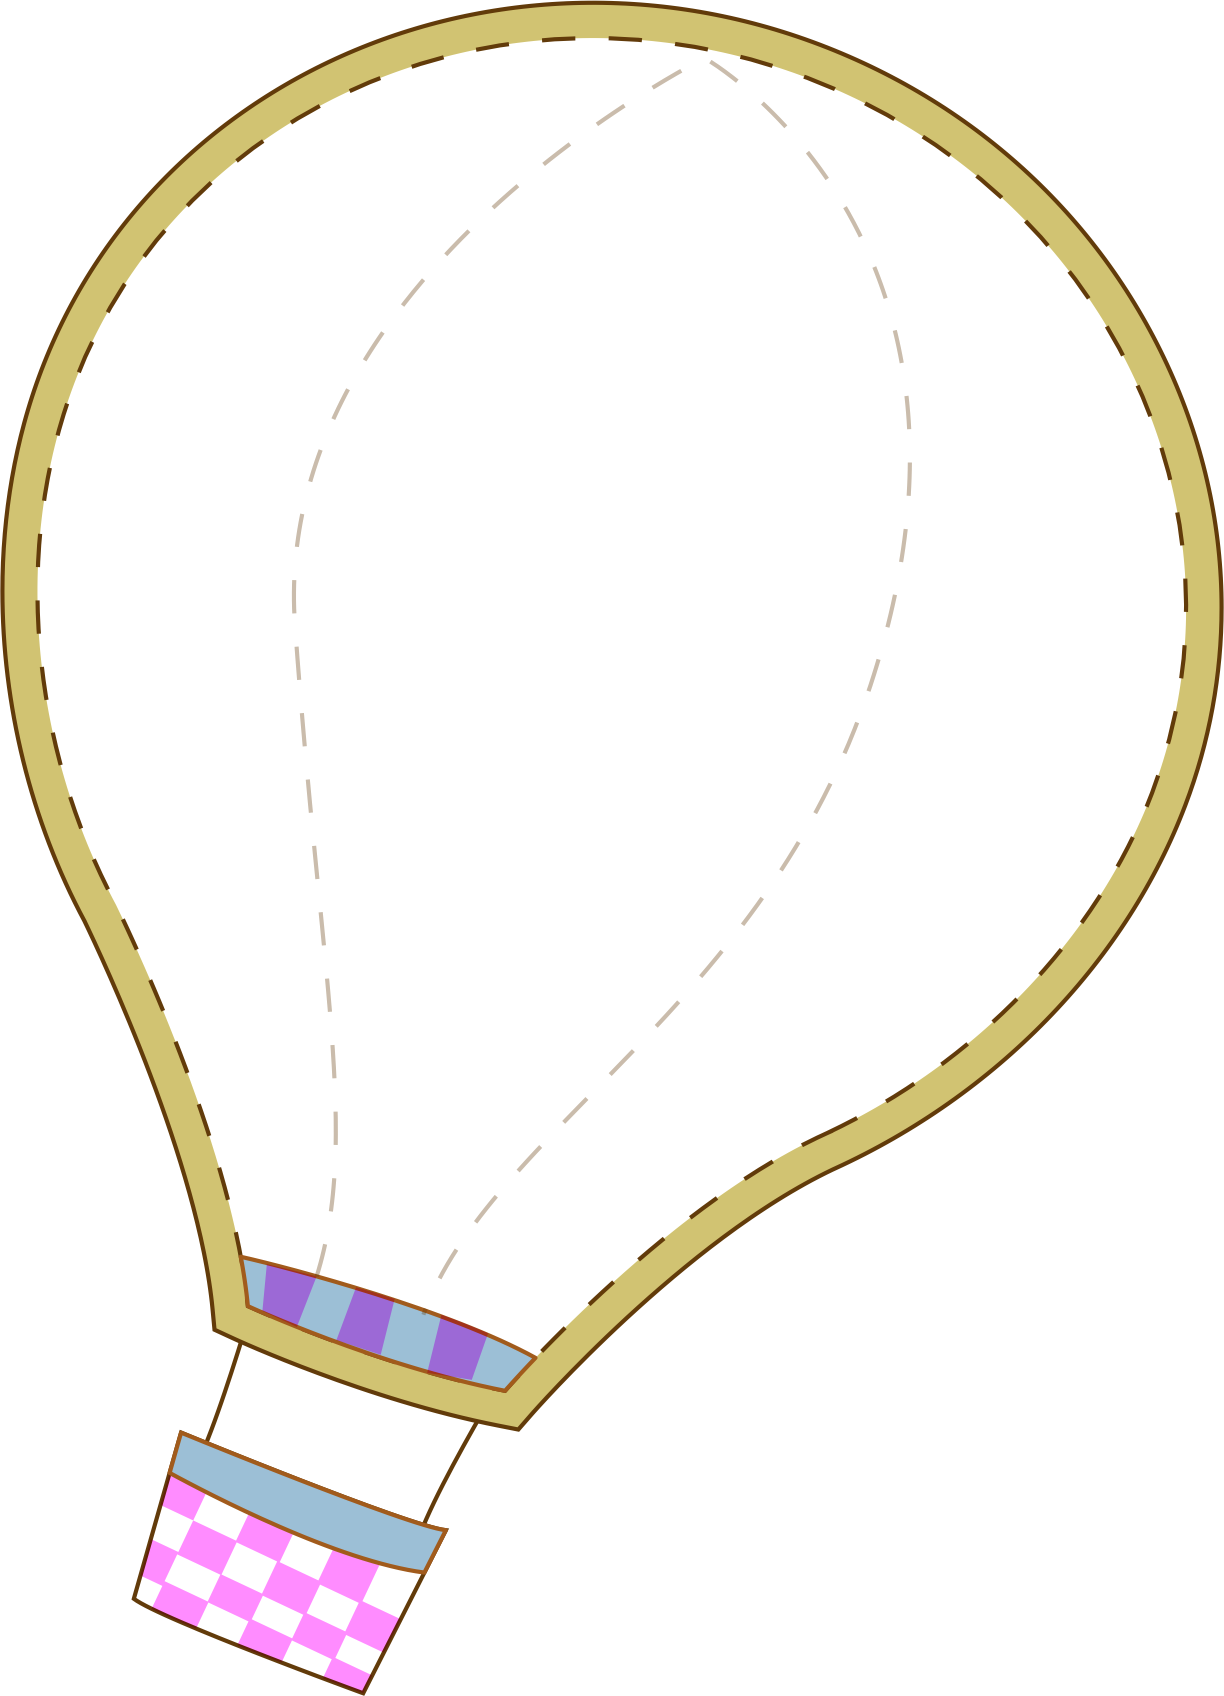 clipart balloon tennis